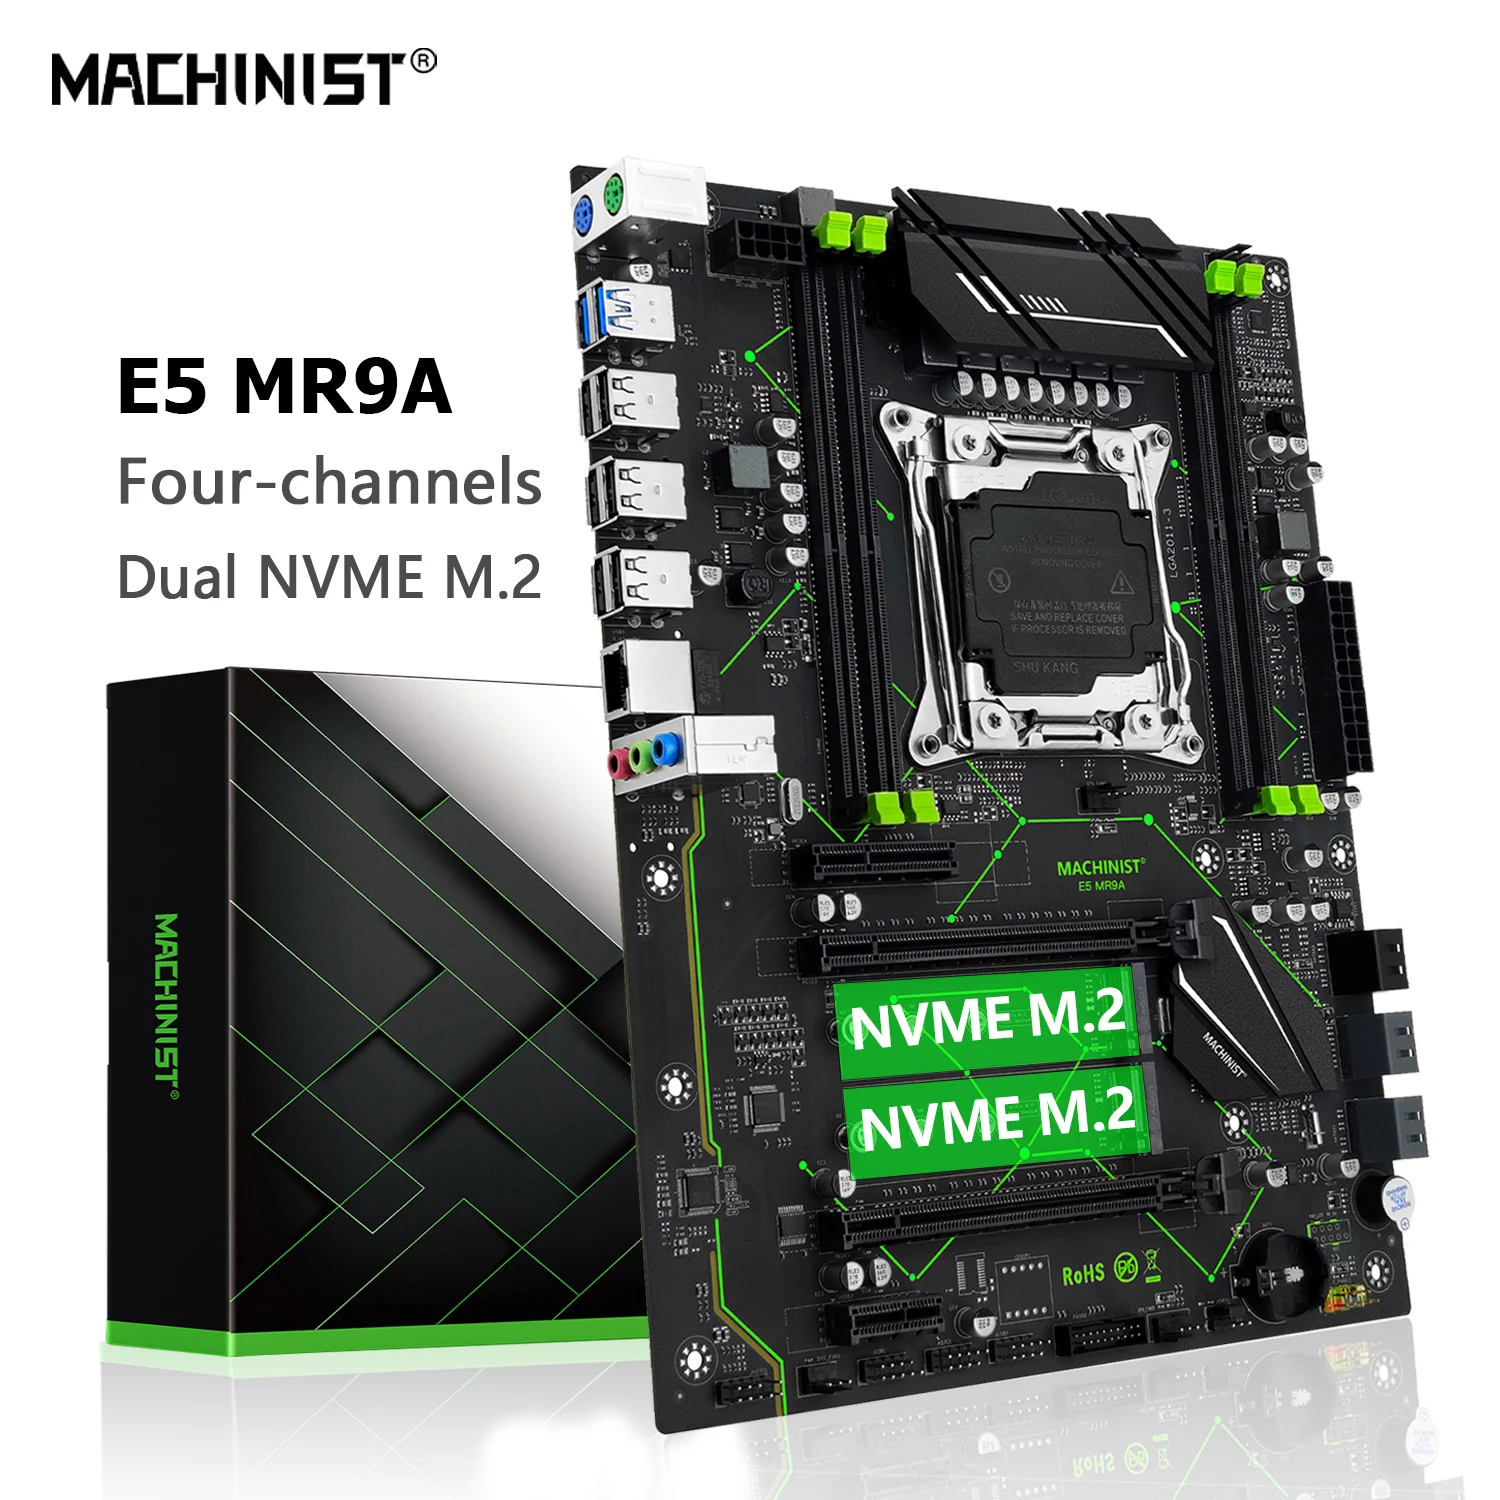 

MACHINIST X99 Motherboard Support Xeon E5 V3 V4 CPU LGA 2011-3 Processor DDR4 ECC RAM Memory ATX Dual NVME M.2 Four Channel MR9A